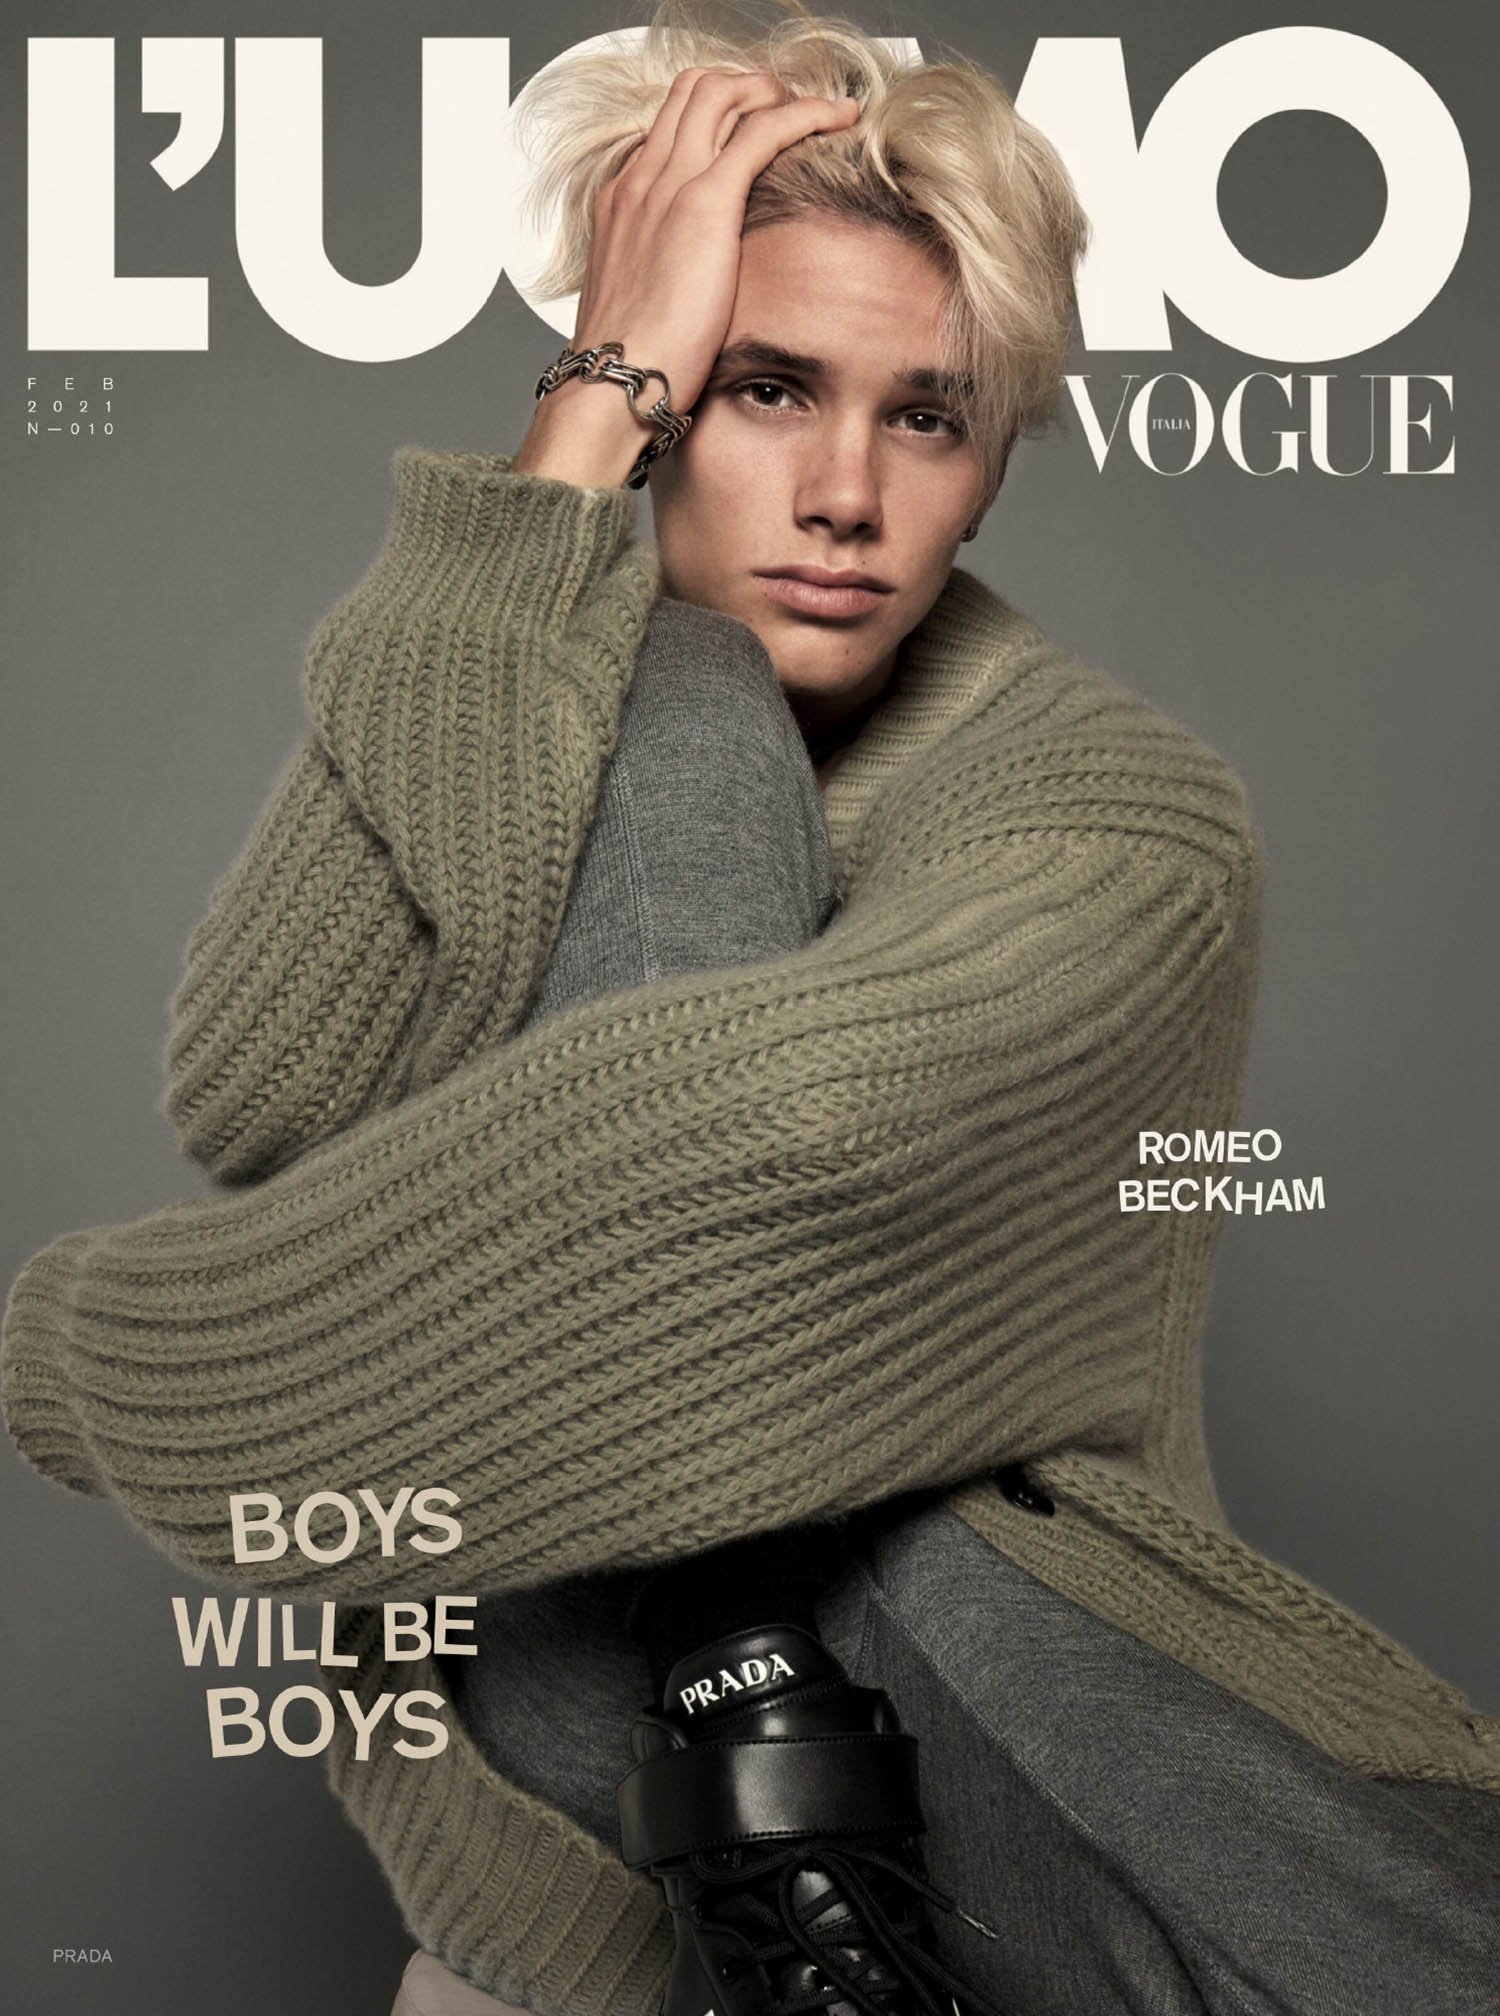 Romeo Beckham - L’Uomo Vogue N°10 par Mert & Marcus